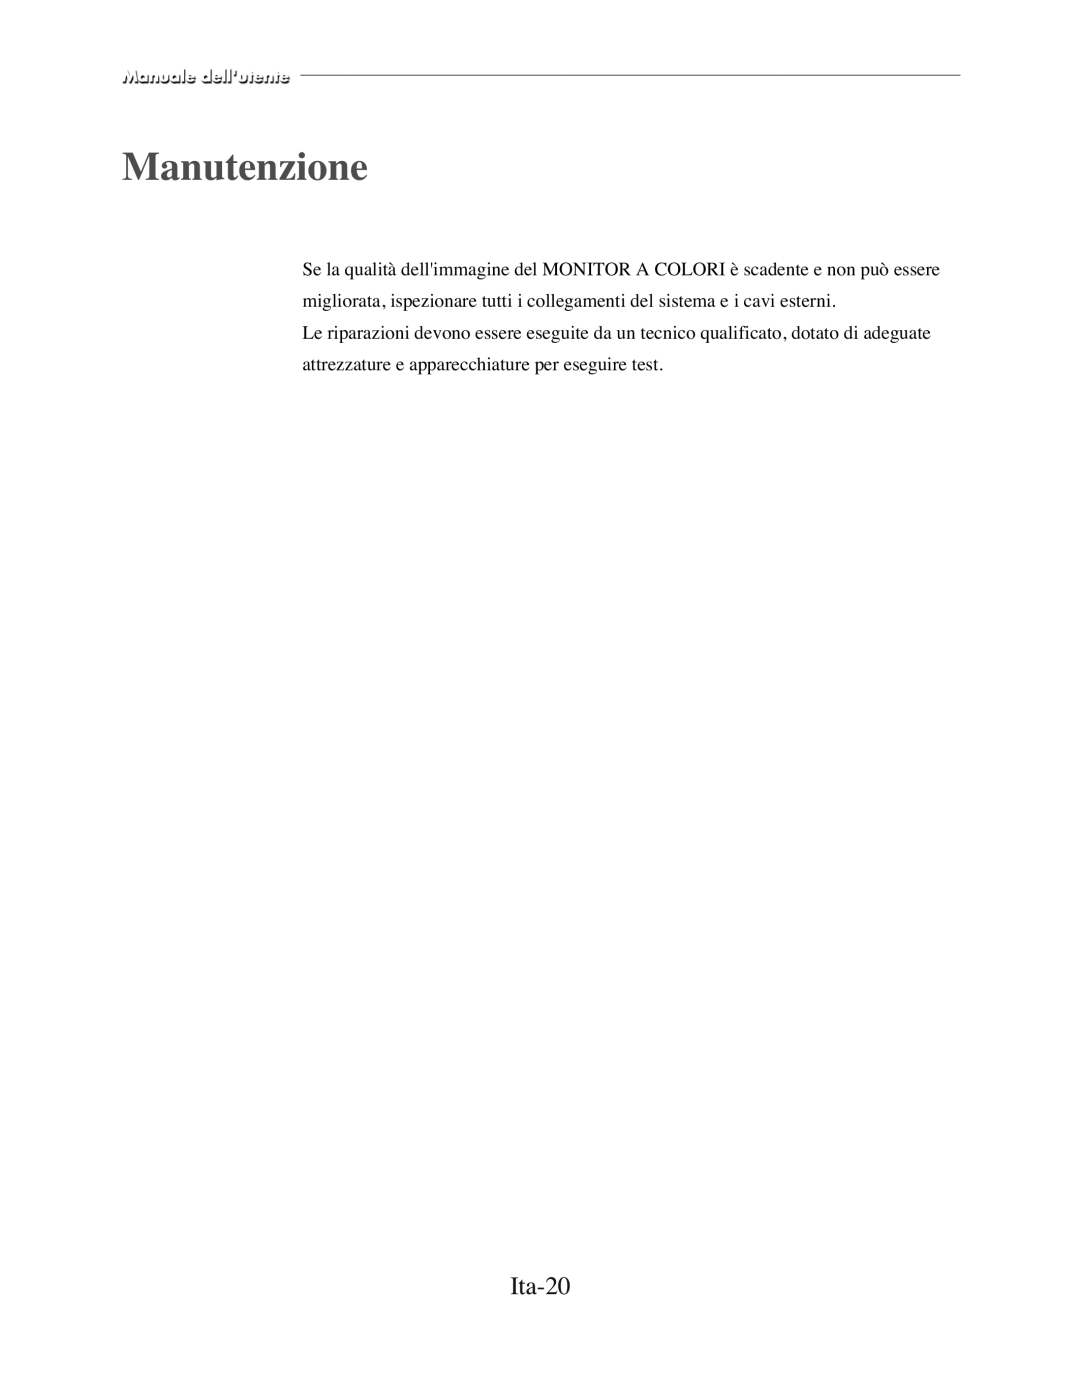 Samsung SMC-152FP manual Manutenzione, Ita-20 